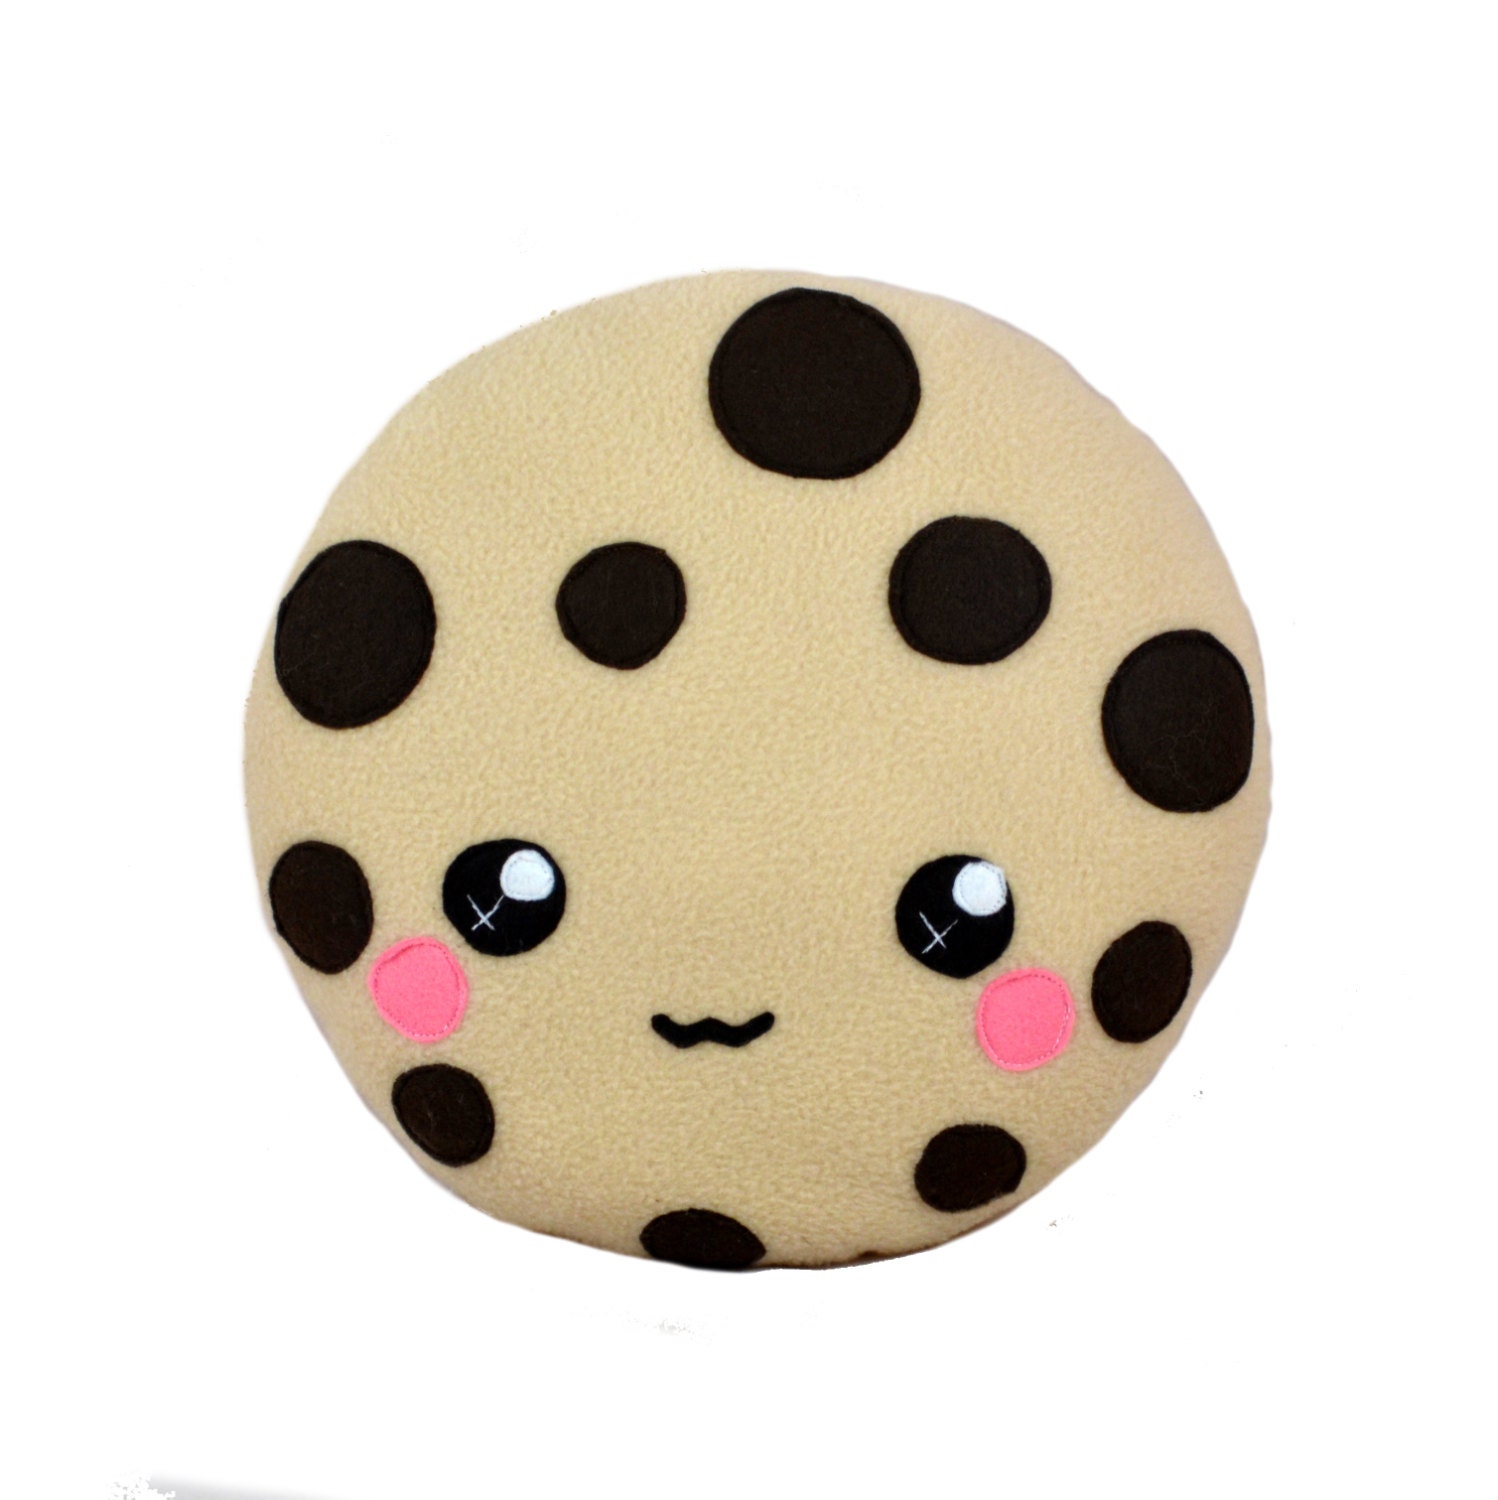  Kawaii cookie plush toy cushion cute chocolate chip cookie 